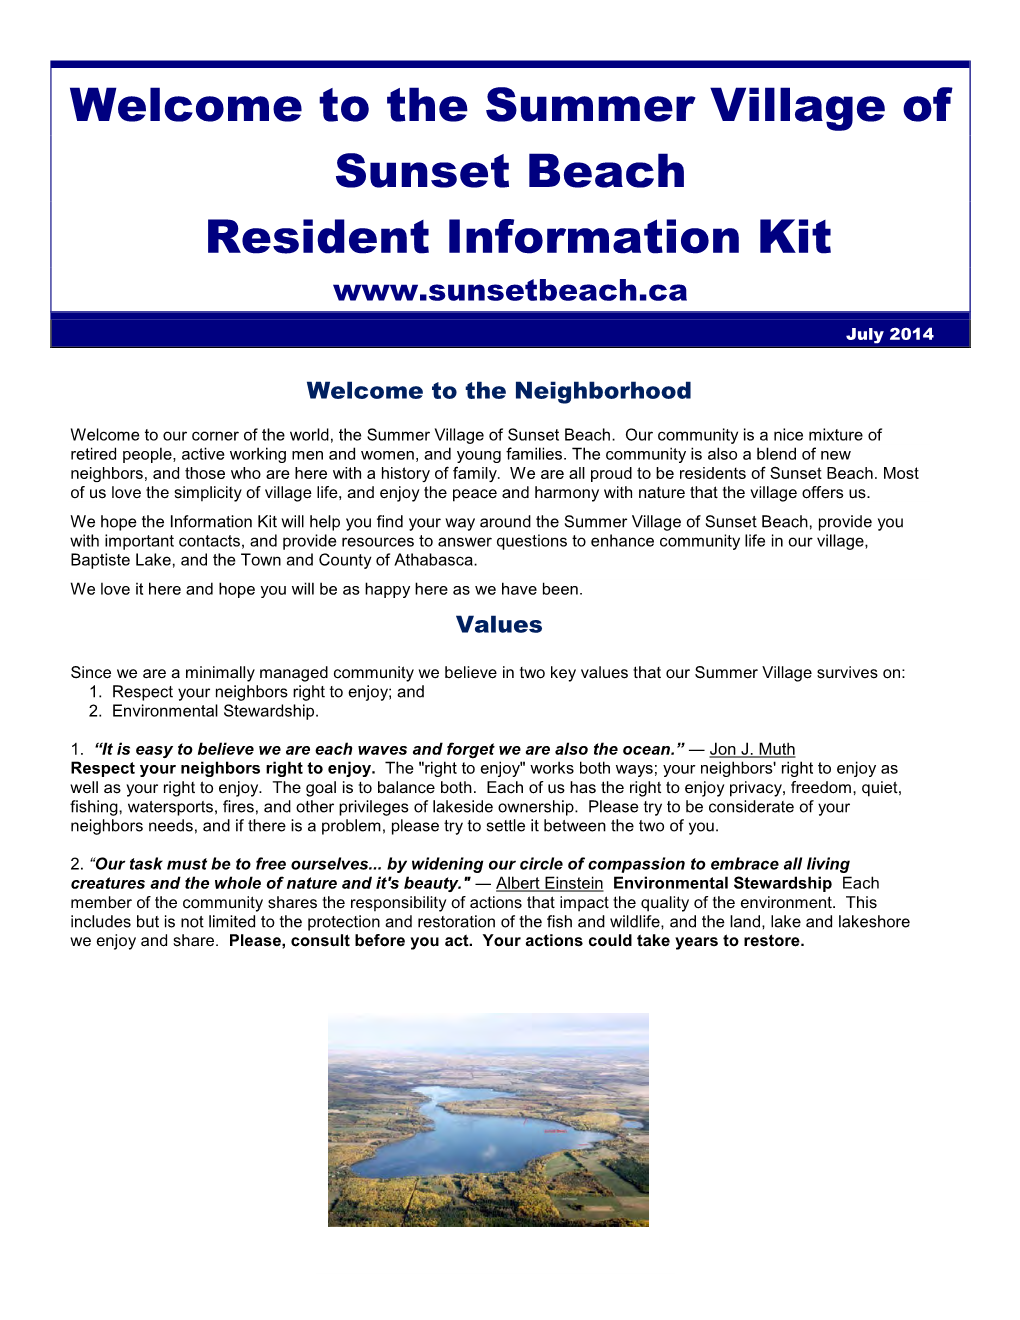 The Summer Village of Sunset Beach Resident Information Kit